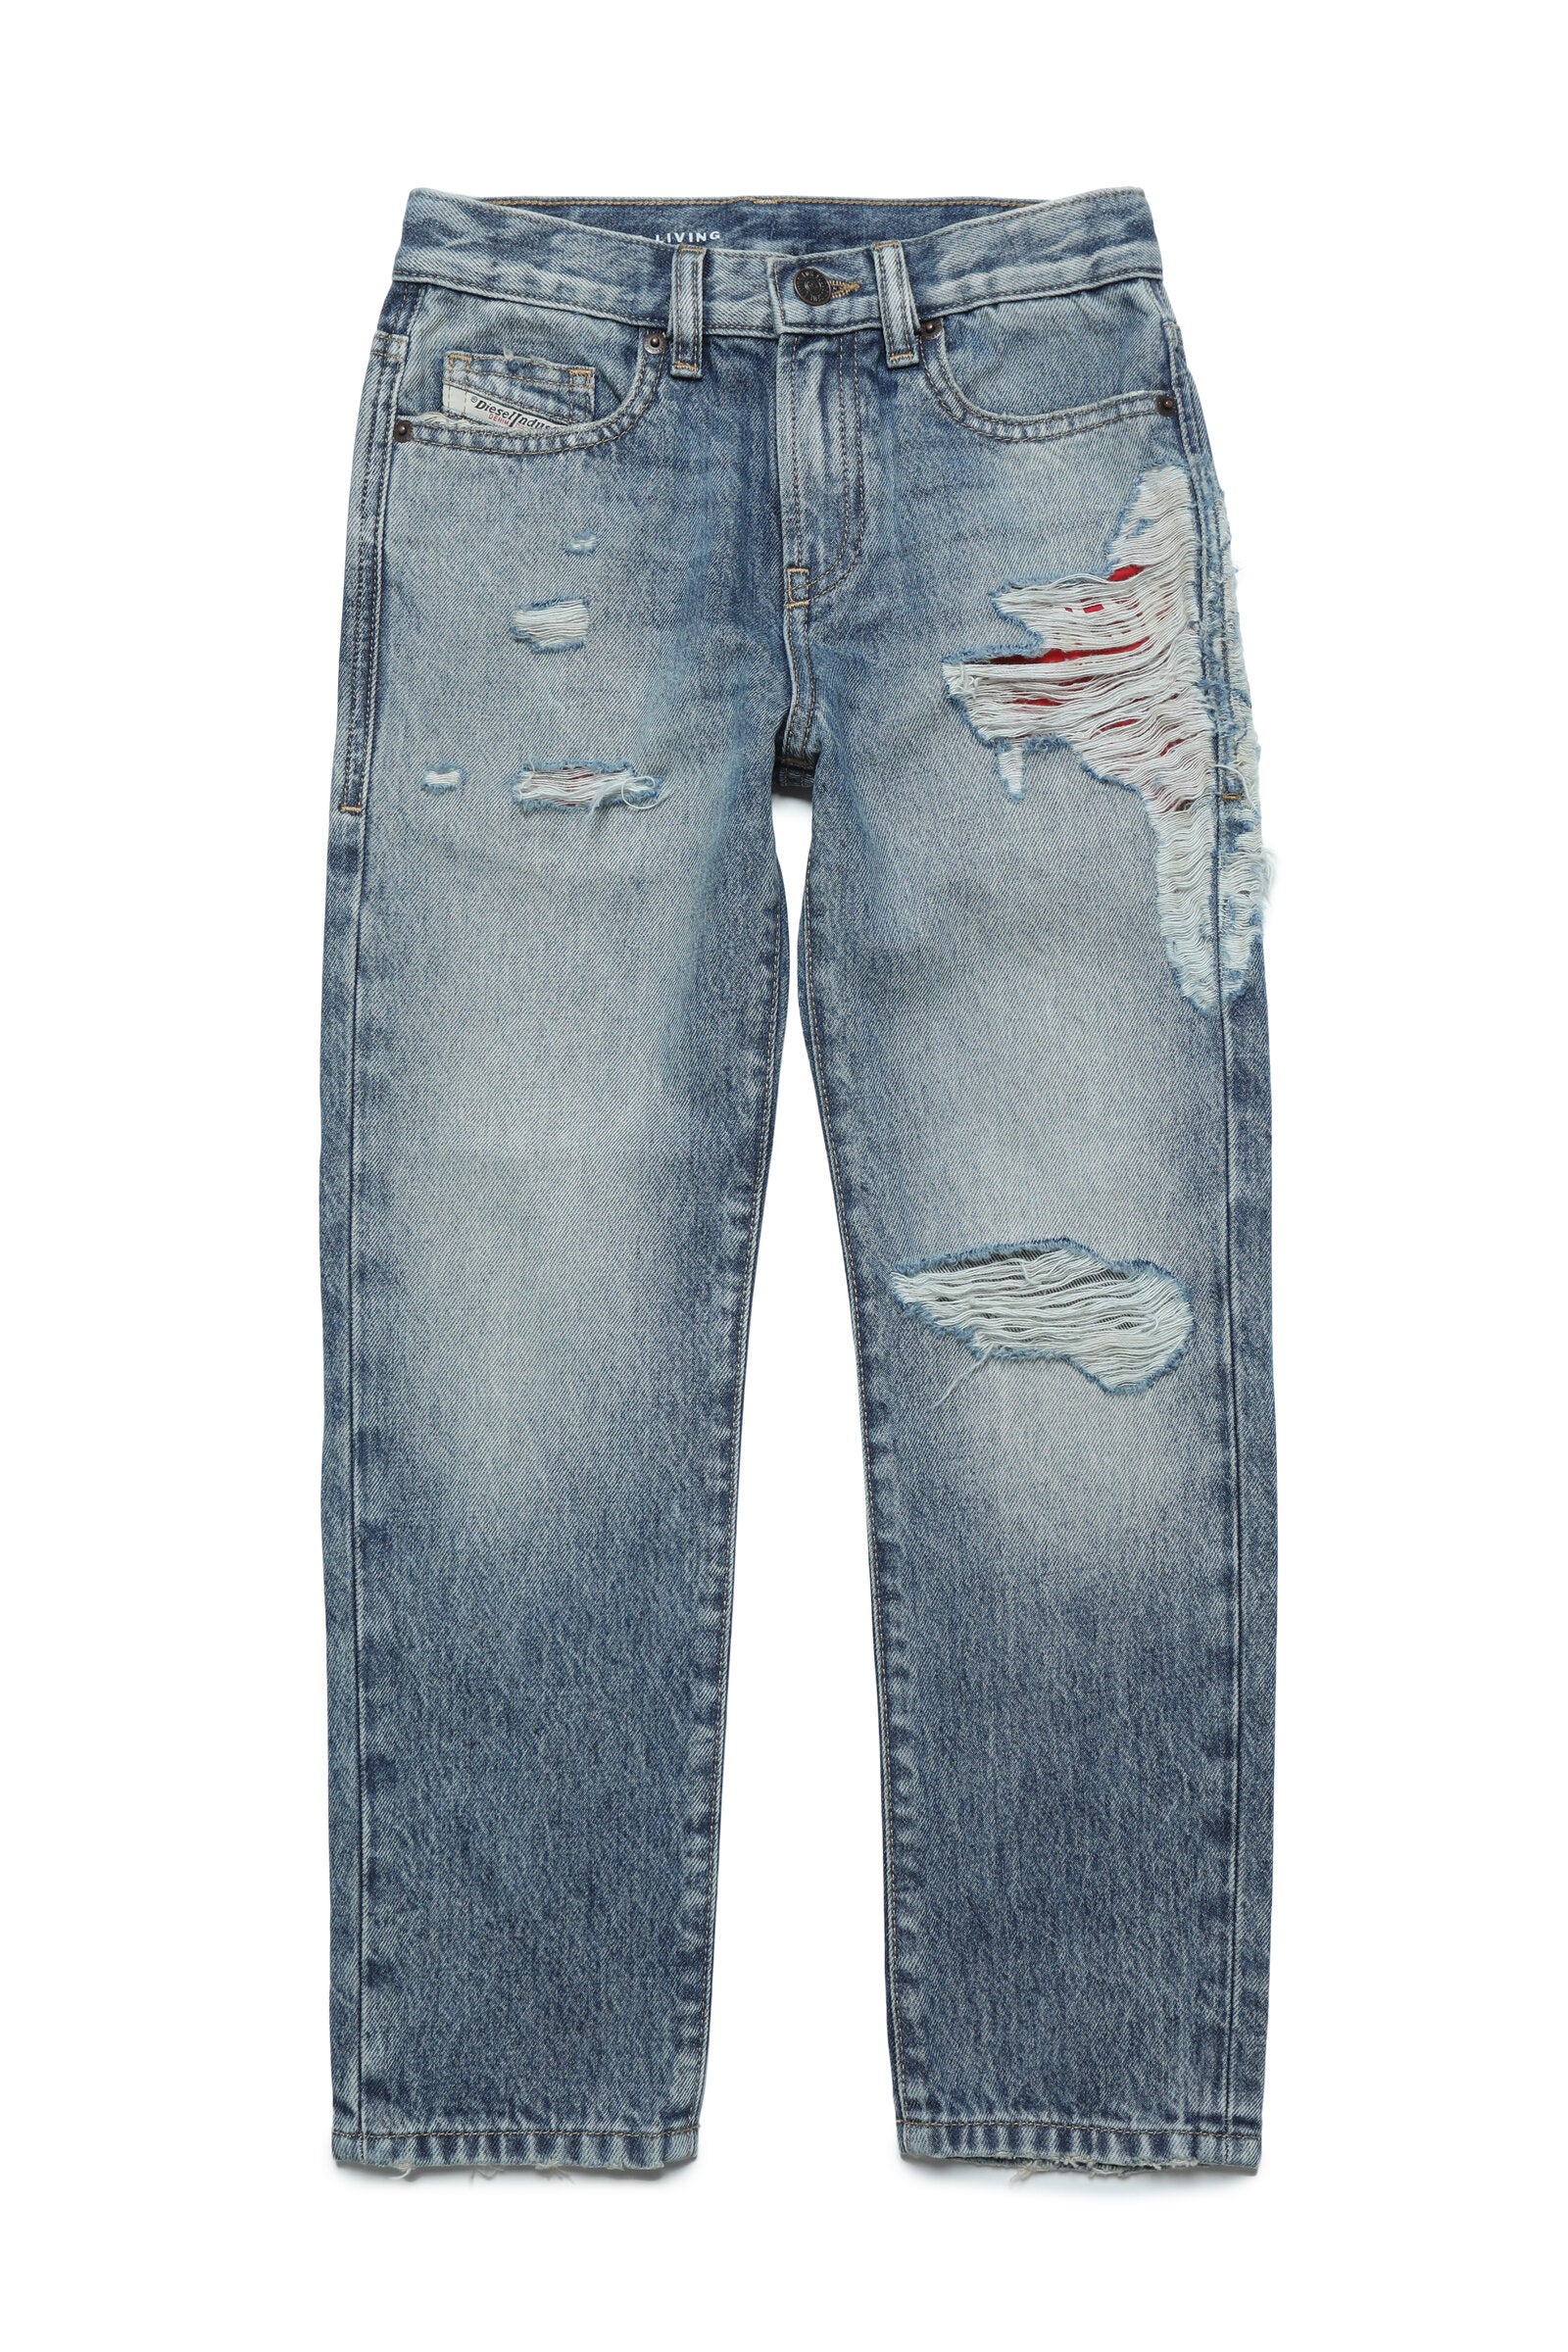 Jeans 2020 D-Viker straight light blue with breaks